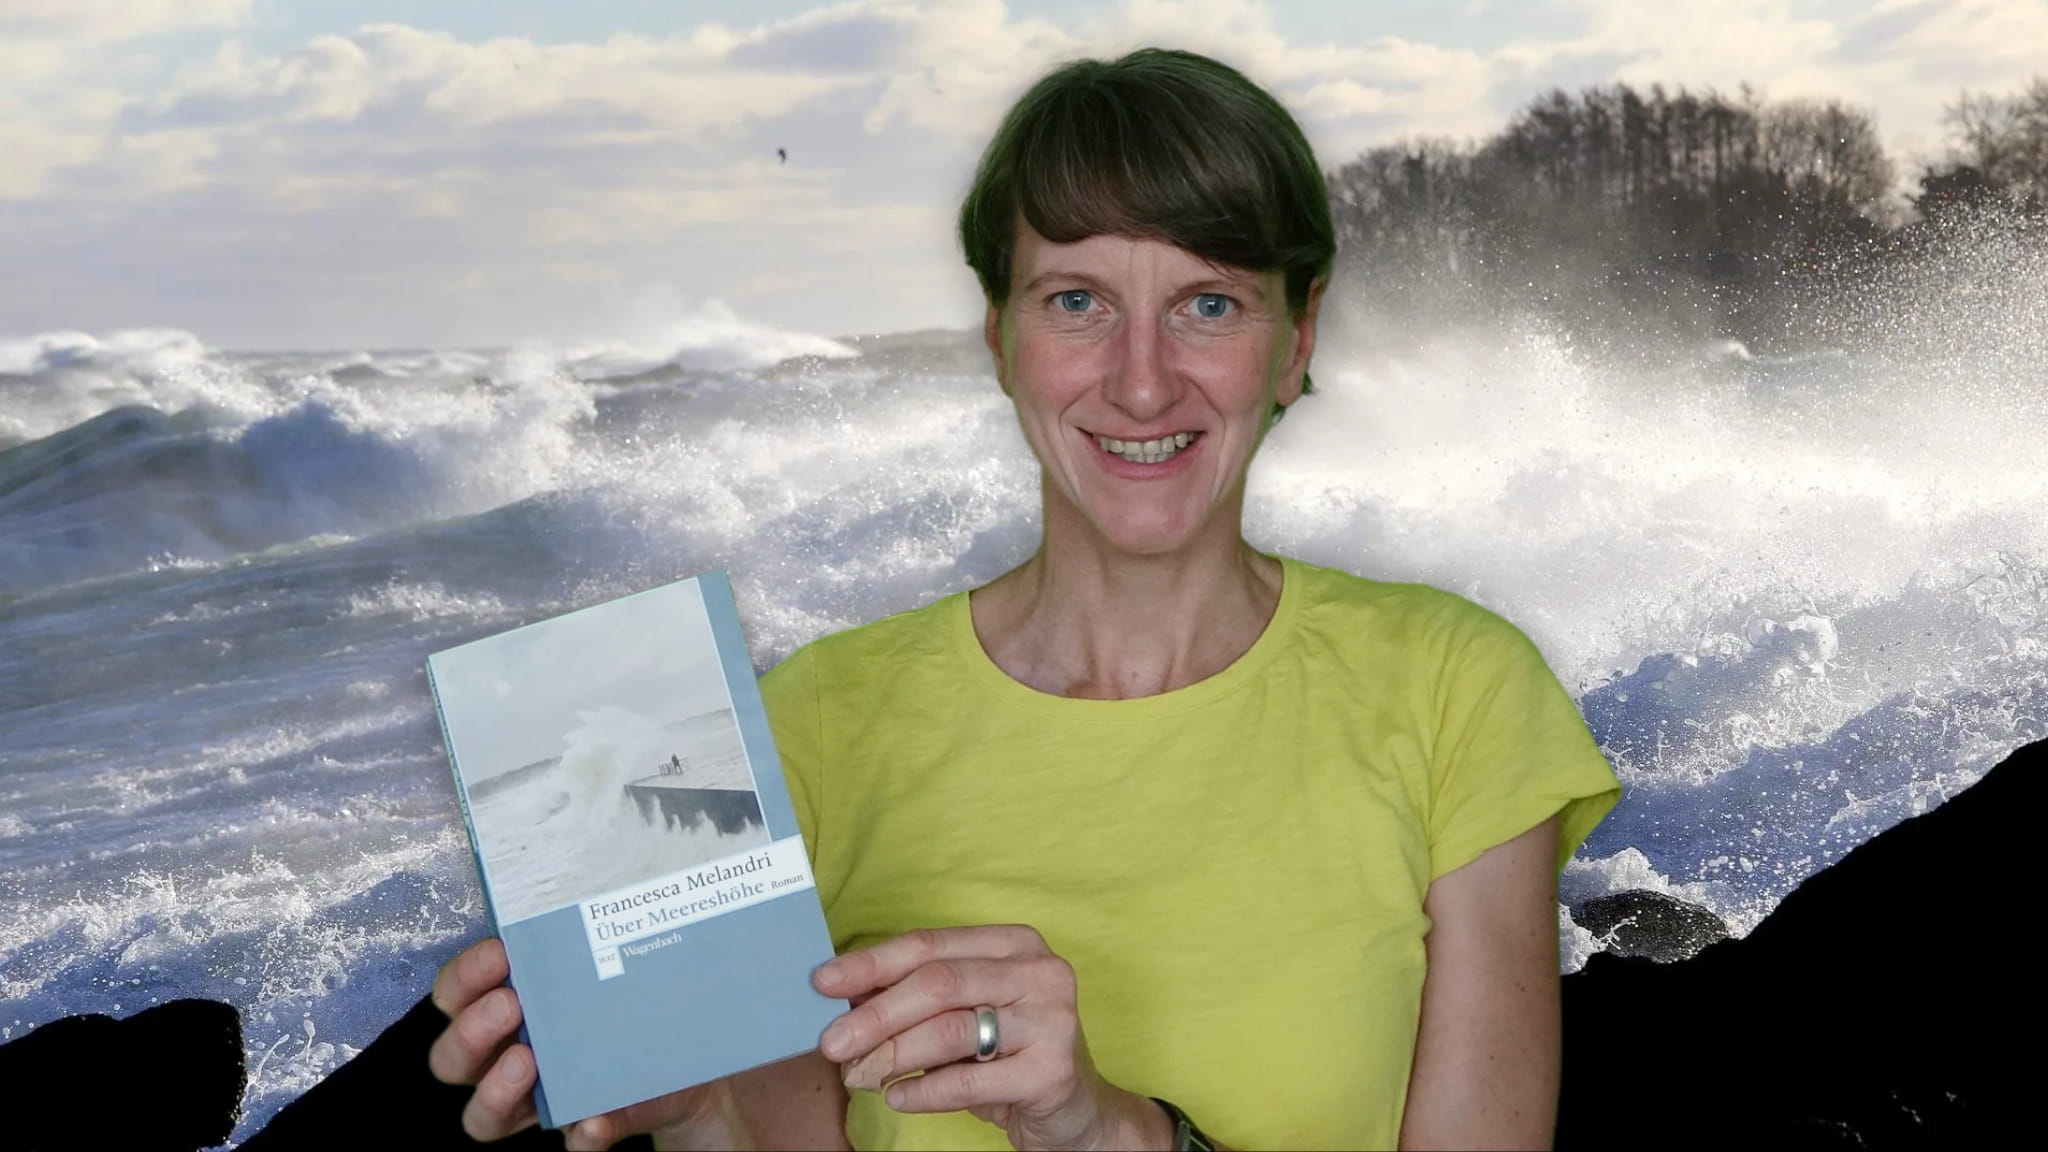 Rosi Kopp empfiehlt "Über Meereshöhe".